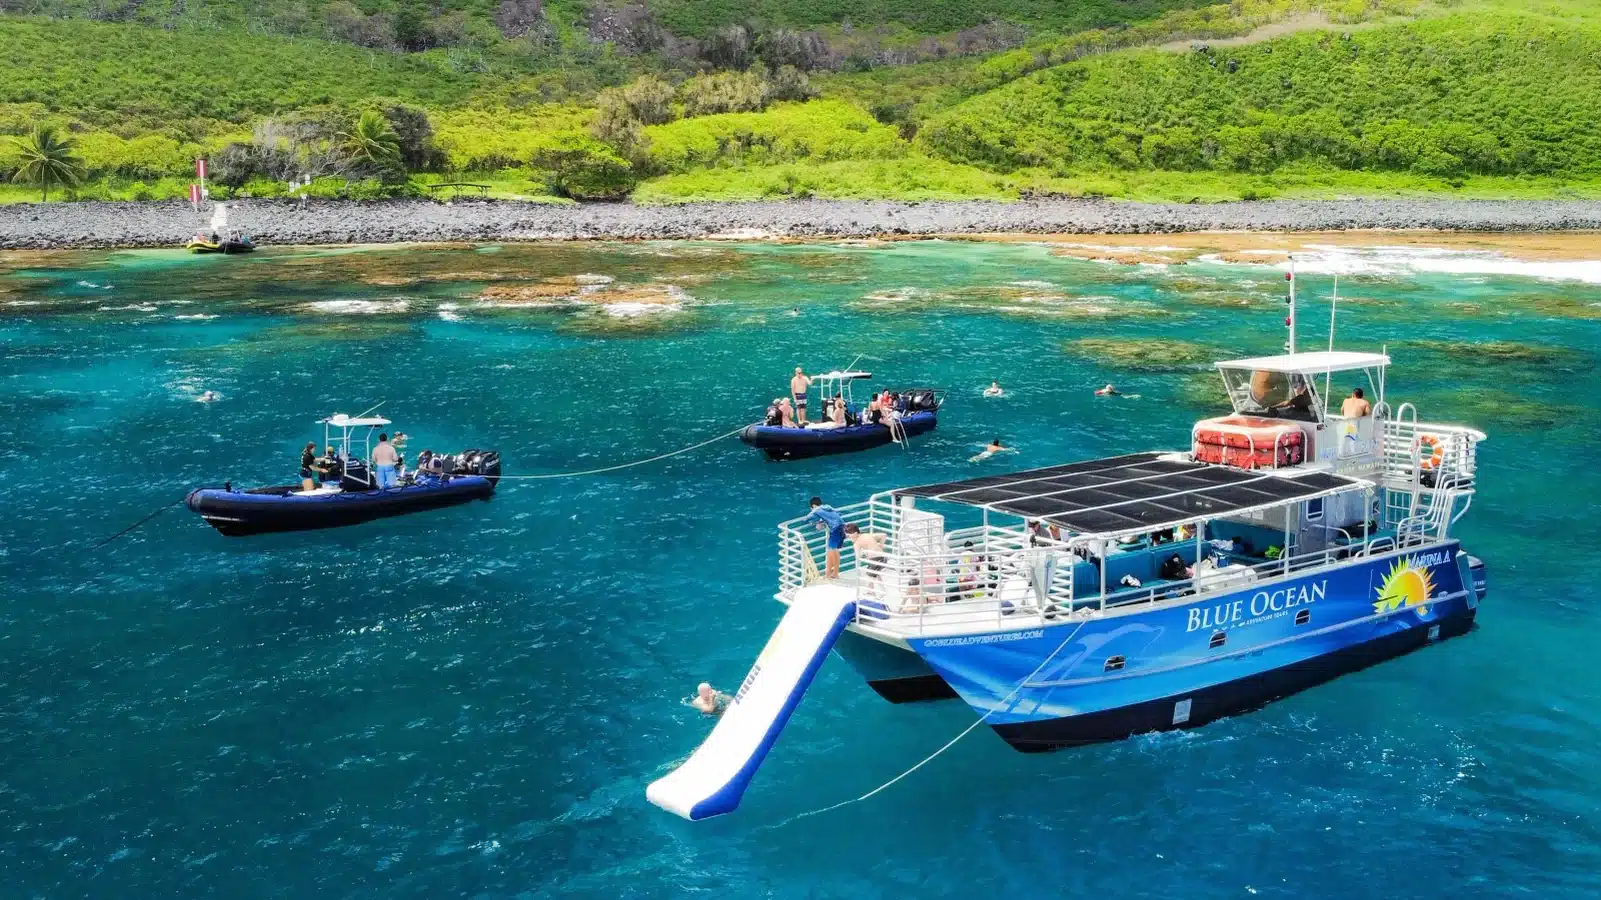 Na Pali Coast Power Catamaran Scenic & Snorkel Tour is a Boat Activity located in the city of Waimea on Kauai, Hawaii